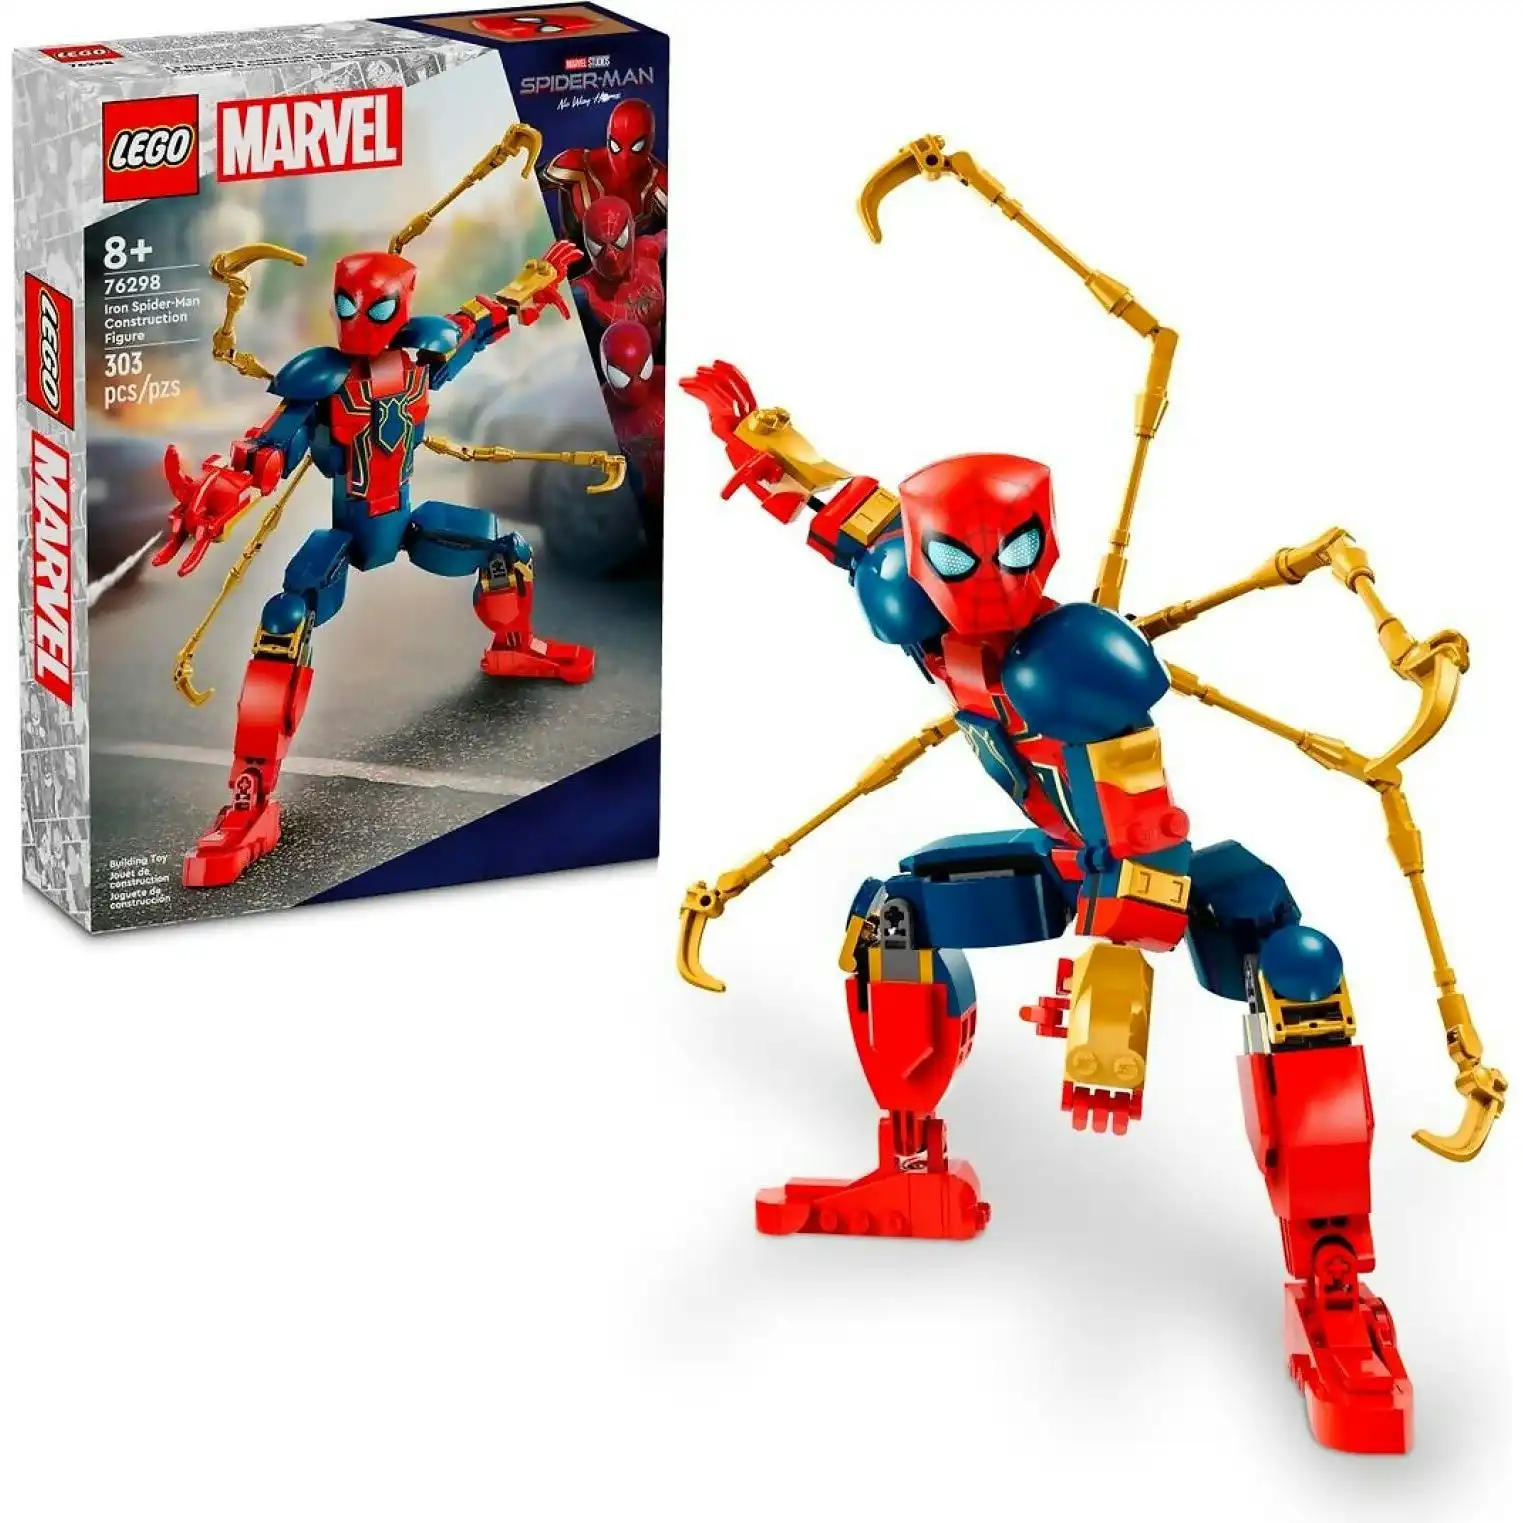 LEGO 76298 Iron Spider-Man Construction Figure - Marvel Super Heroes